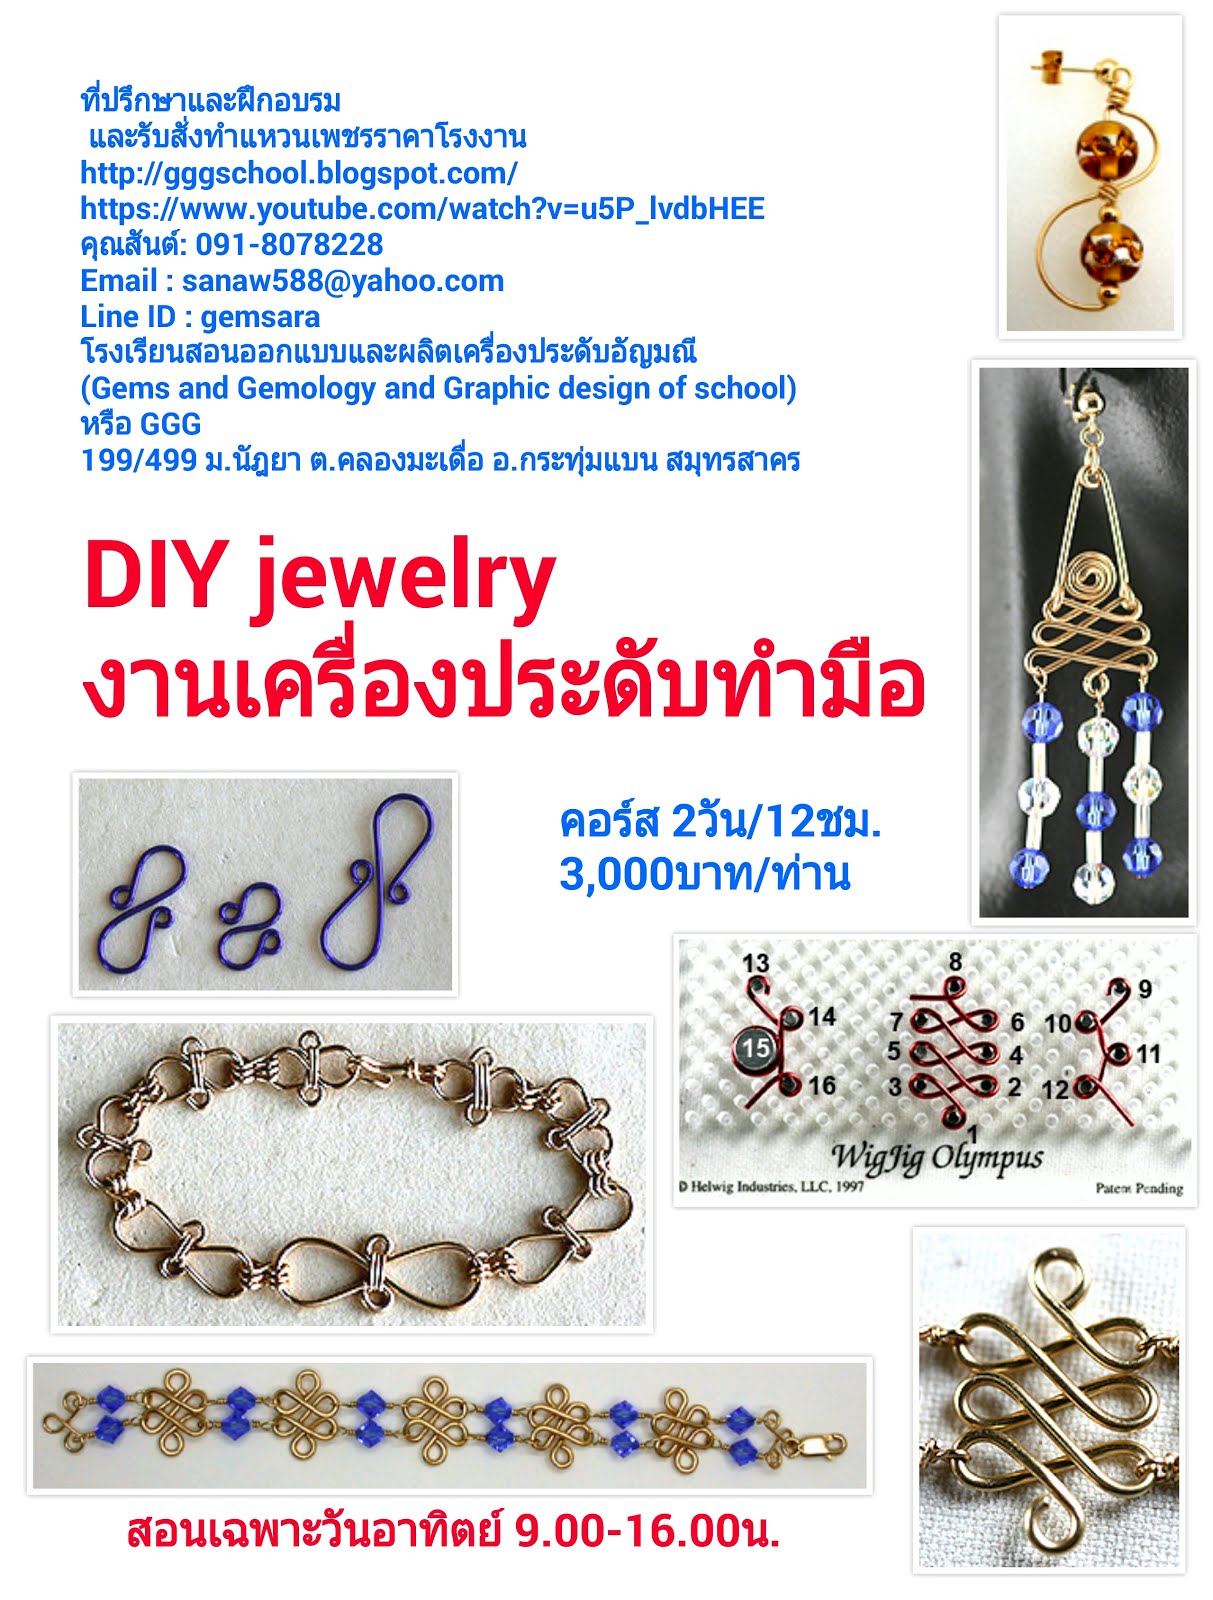 DIY jewelry designs